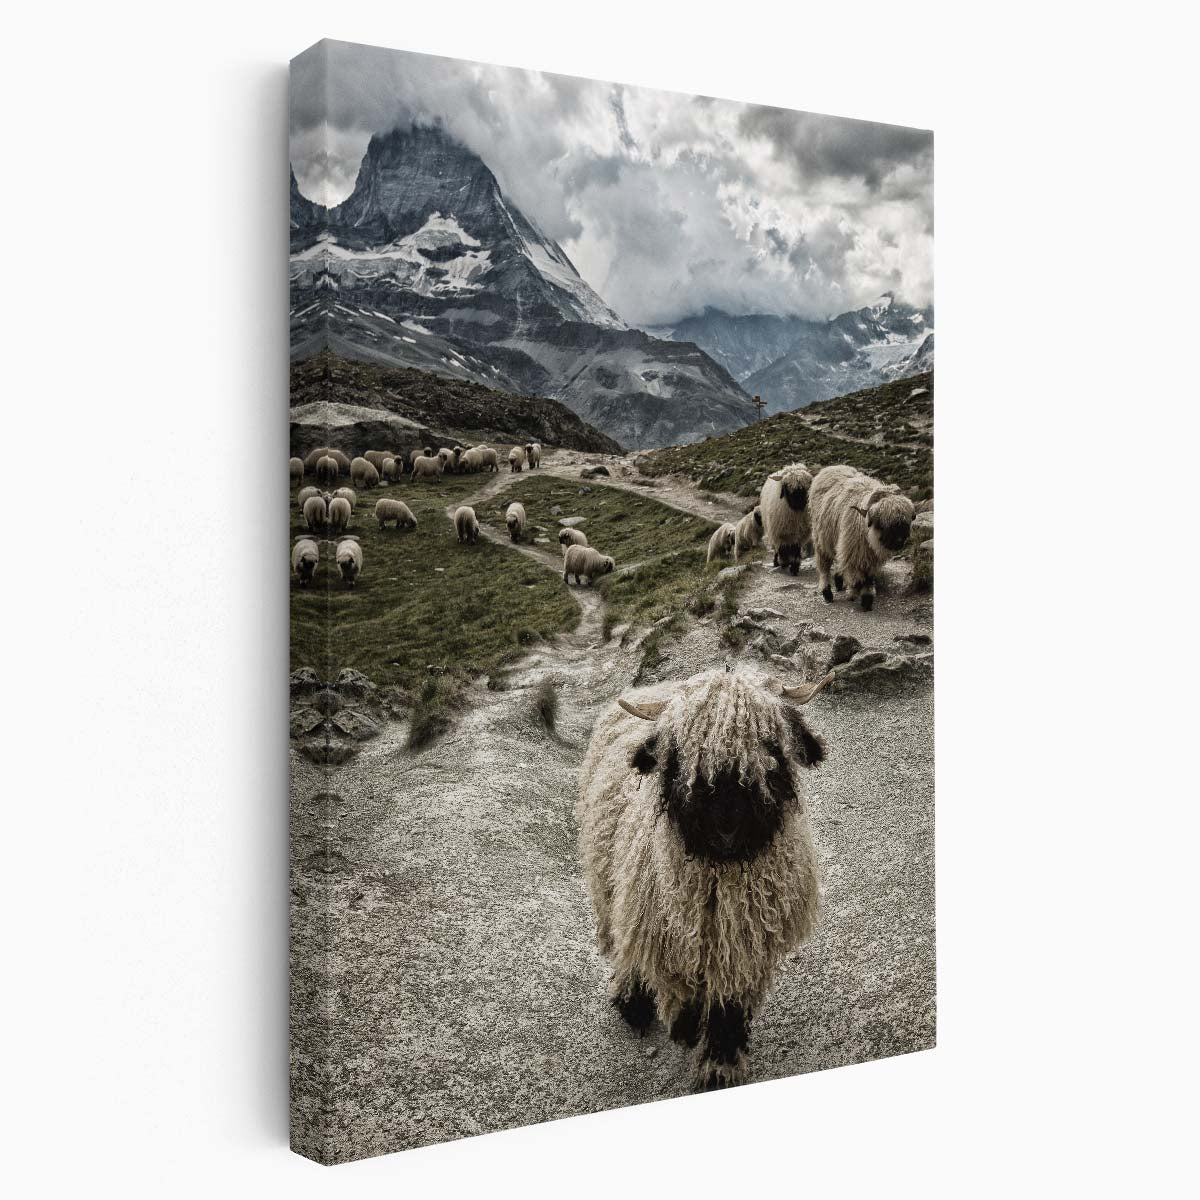 Swiss Valais Blacknose Sheep on Matterhorn Peak - Photography Wall Art by Luxuriance Designs, made in USA